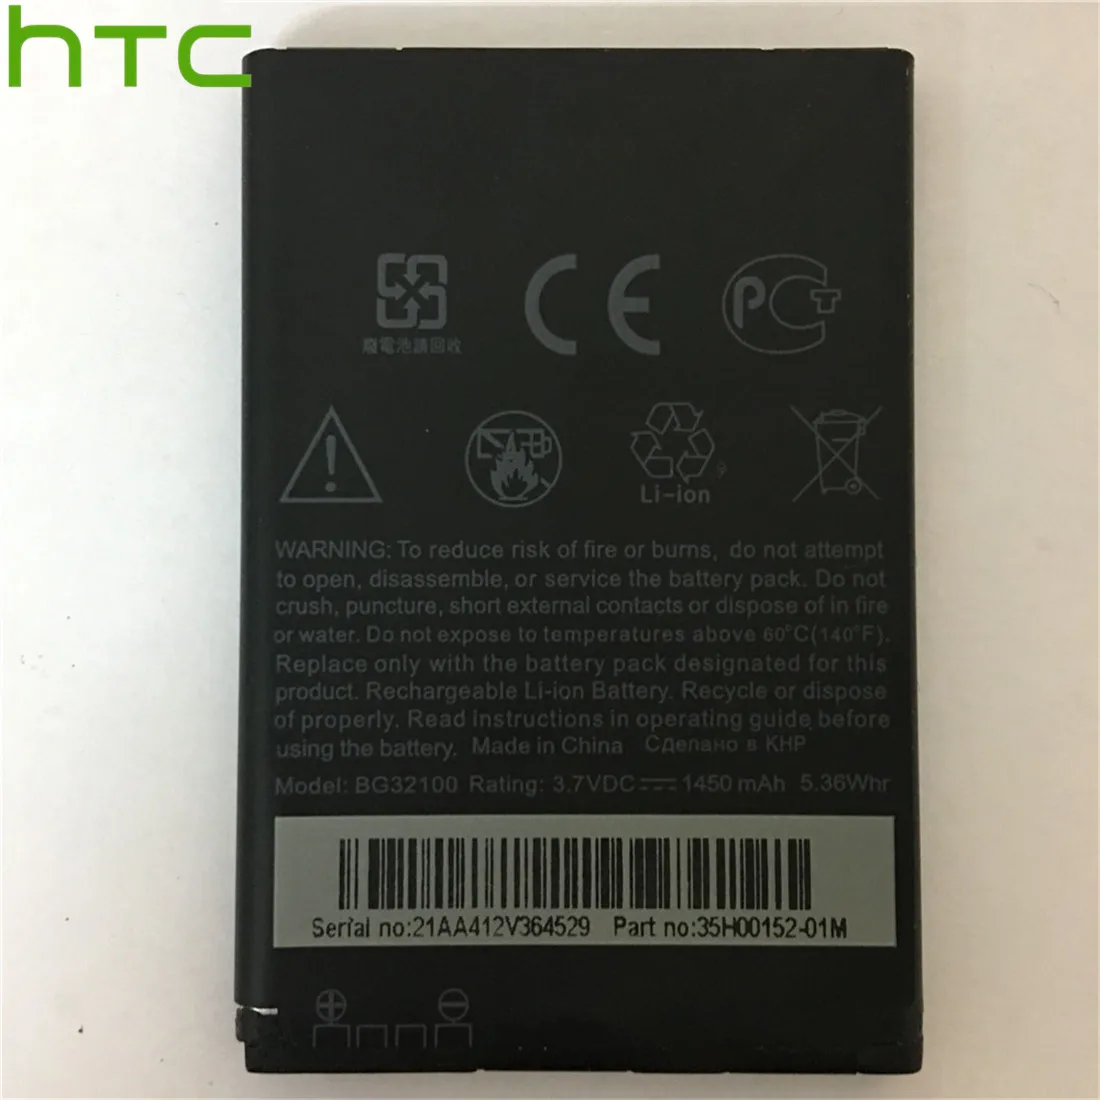 

100% New High Quality BG32100 1450mAh Battery For HTC G11 Incredible S G12 G15 Desire s S510E S710e S710D C510e Smartphone